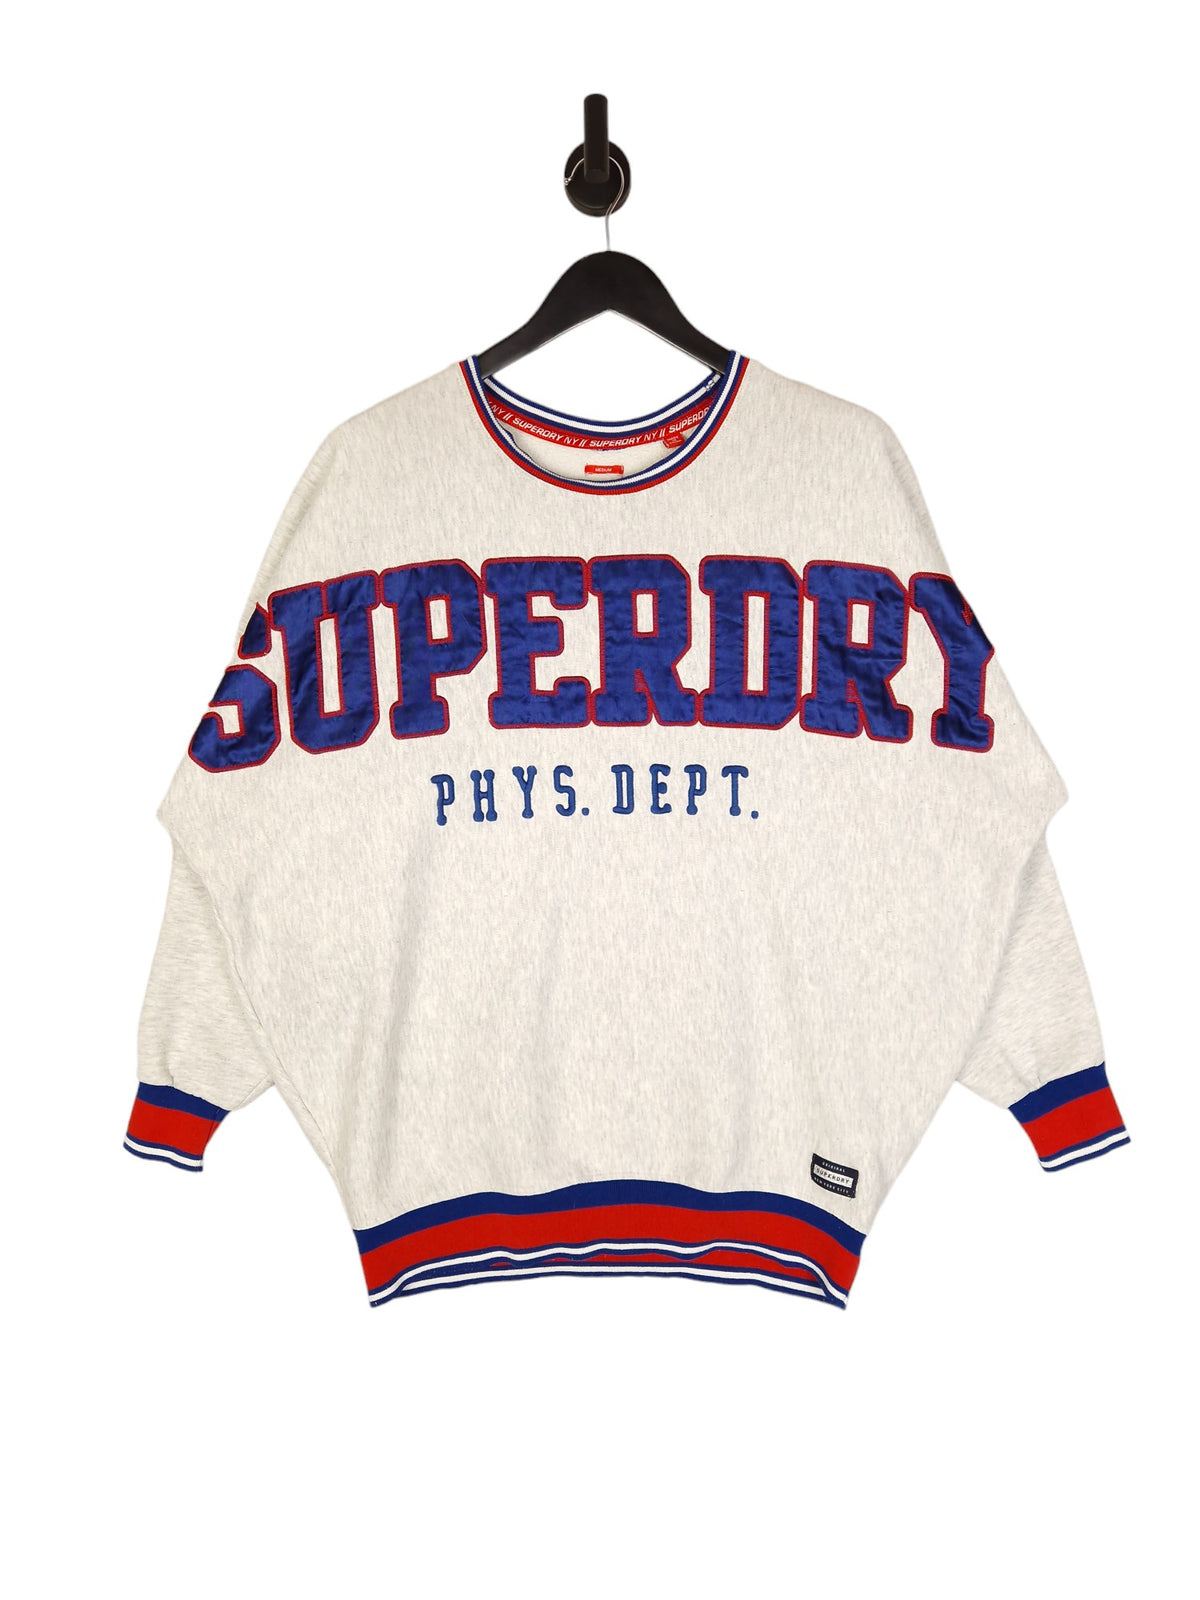 Superdry College Sweatshirt - Size Medium (oversized)